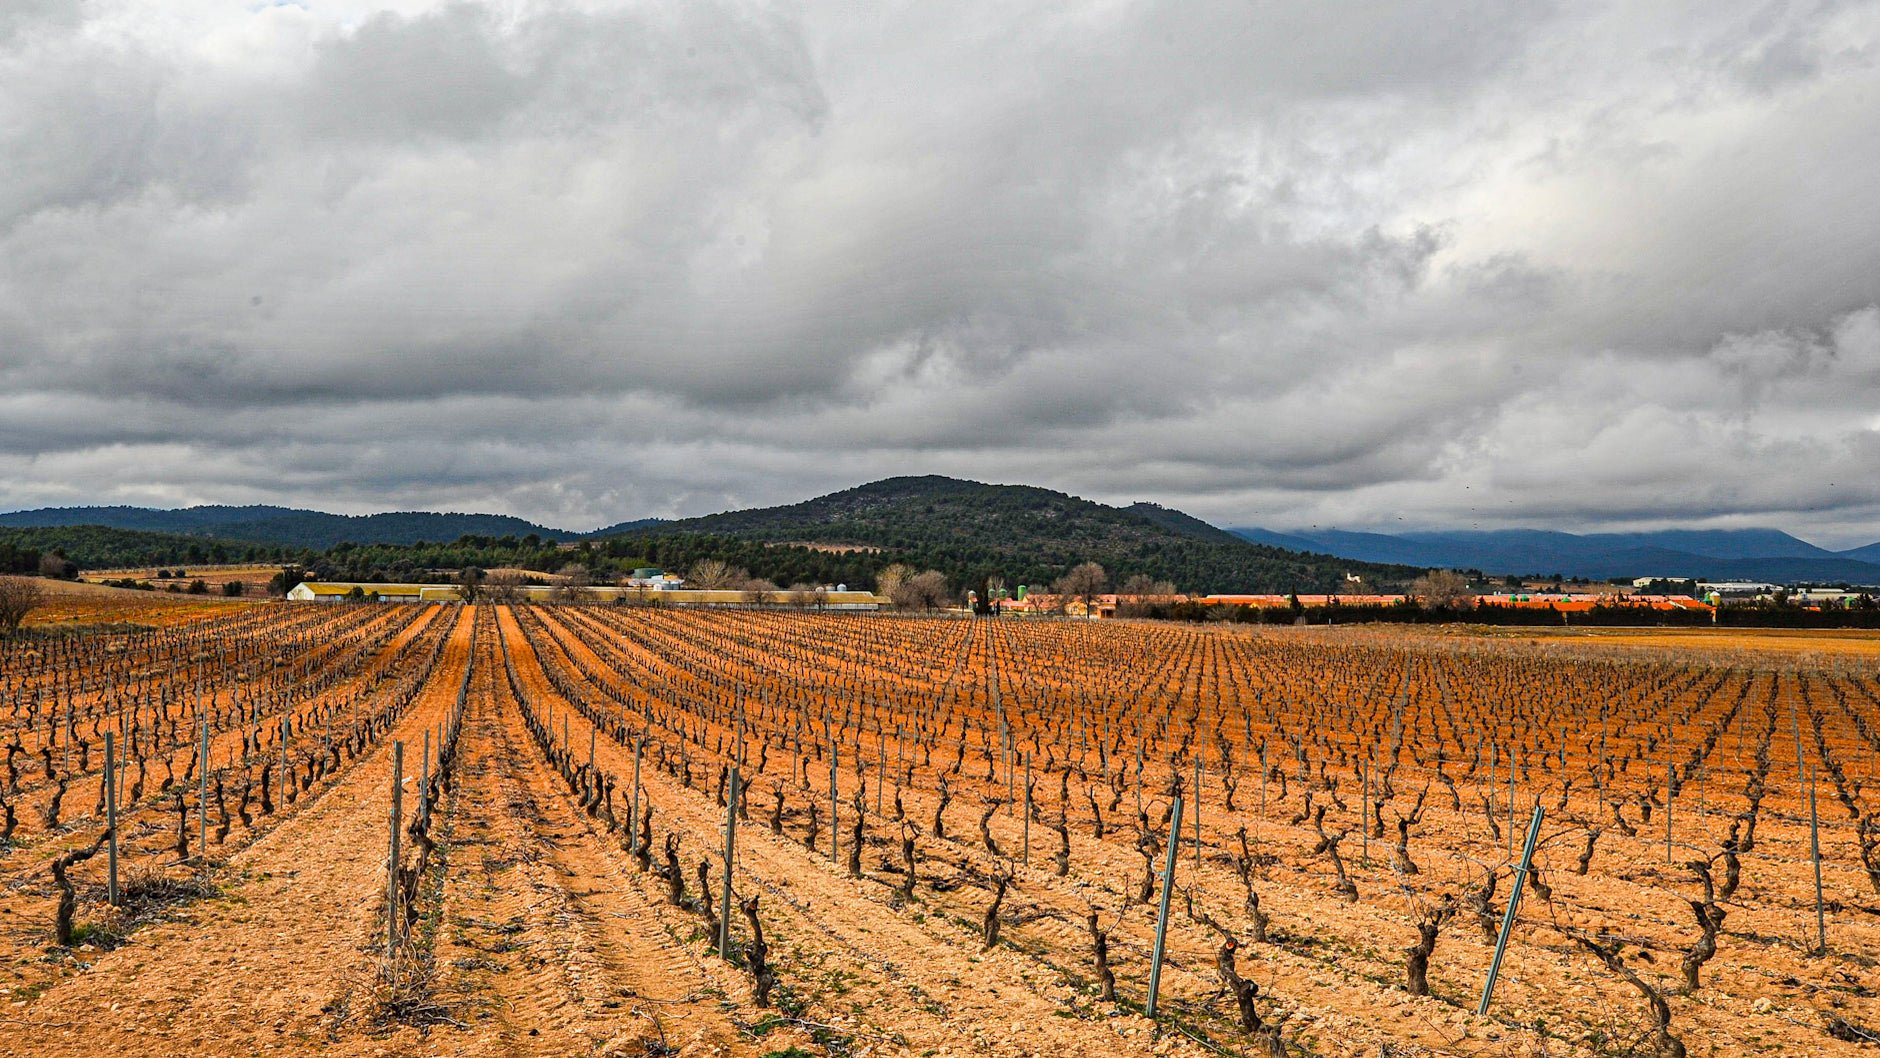 A vineyard in the Spanish wine region of Manchuela